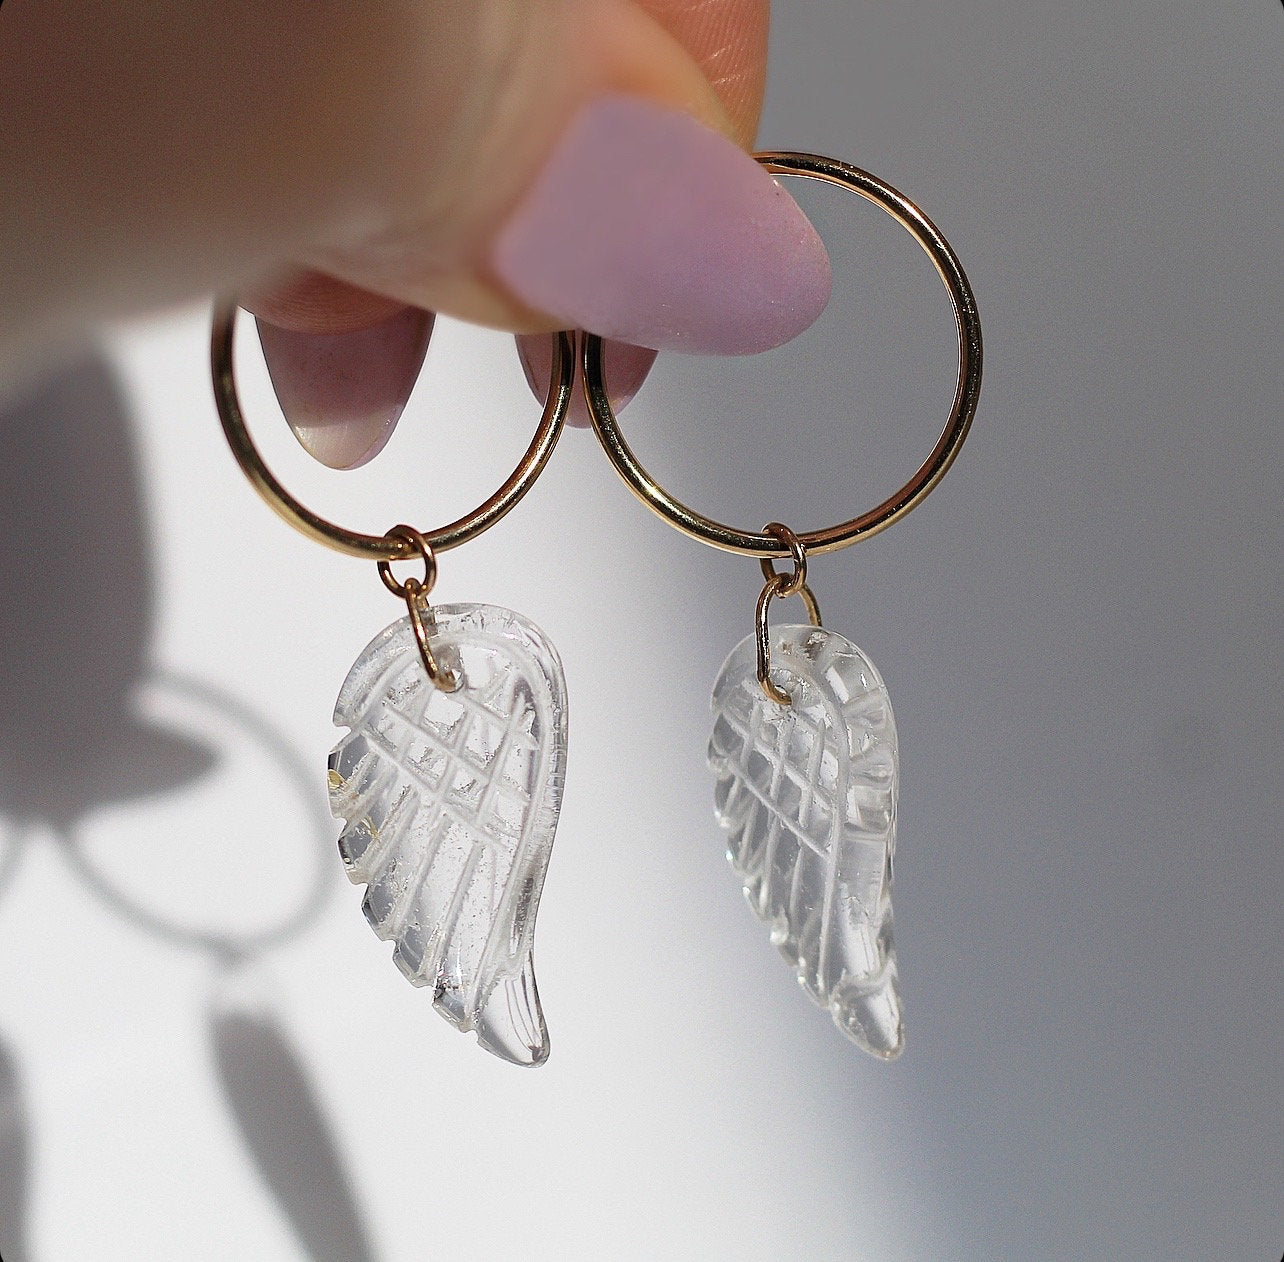 Crystal Angel Wing Earrings, Angel Wing Charm Earrings, Angel Wing Jewelry, Angel Wing Earrings Gold, Huggie Charm Hoops, Angel Jewelry